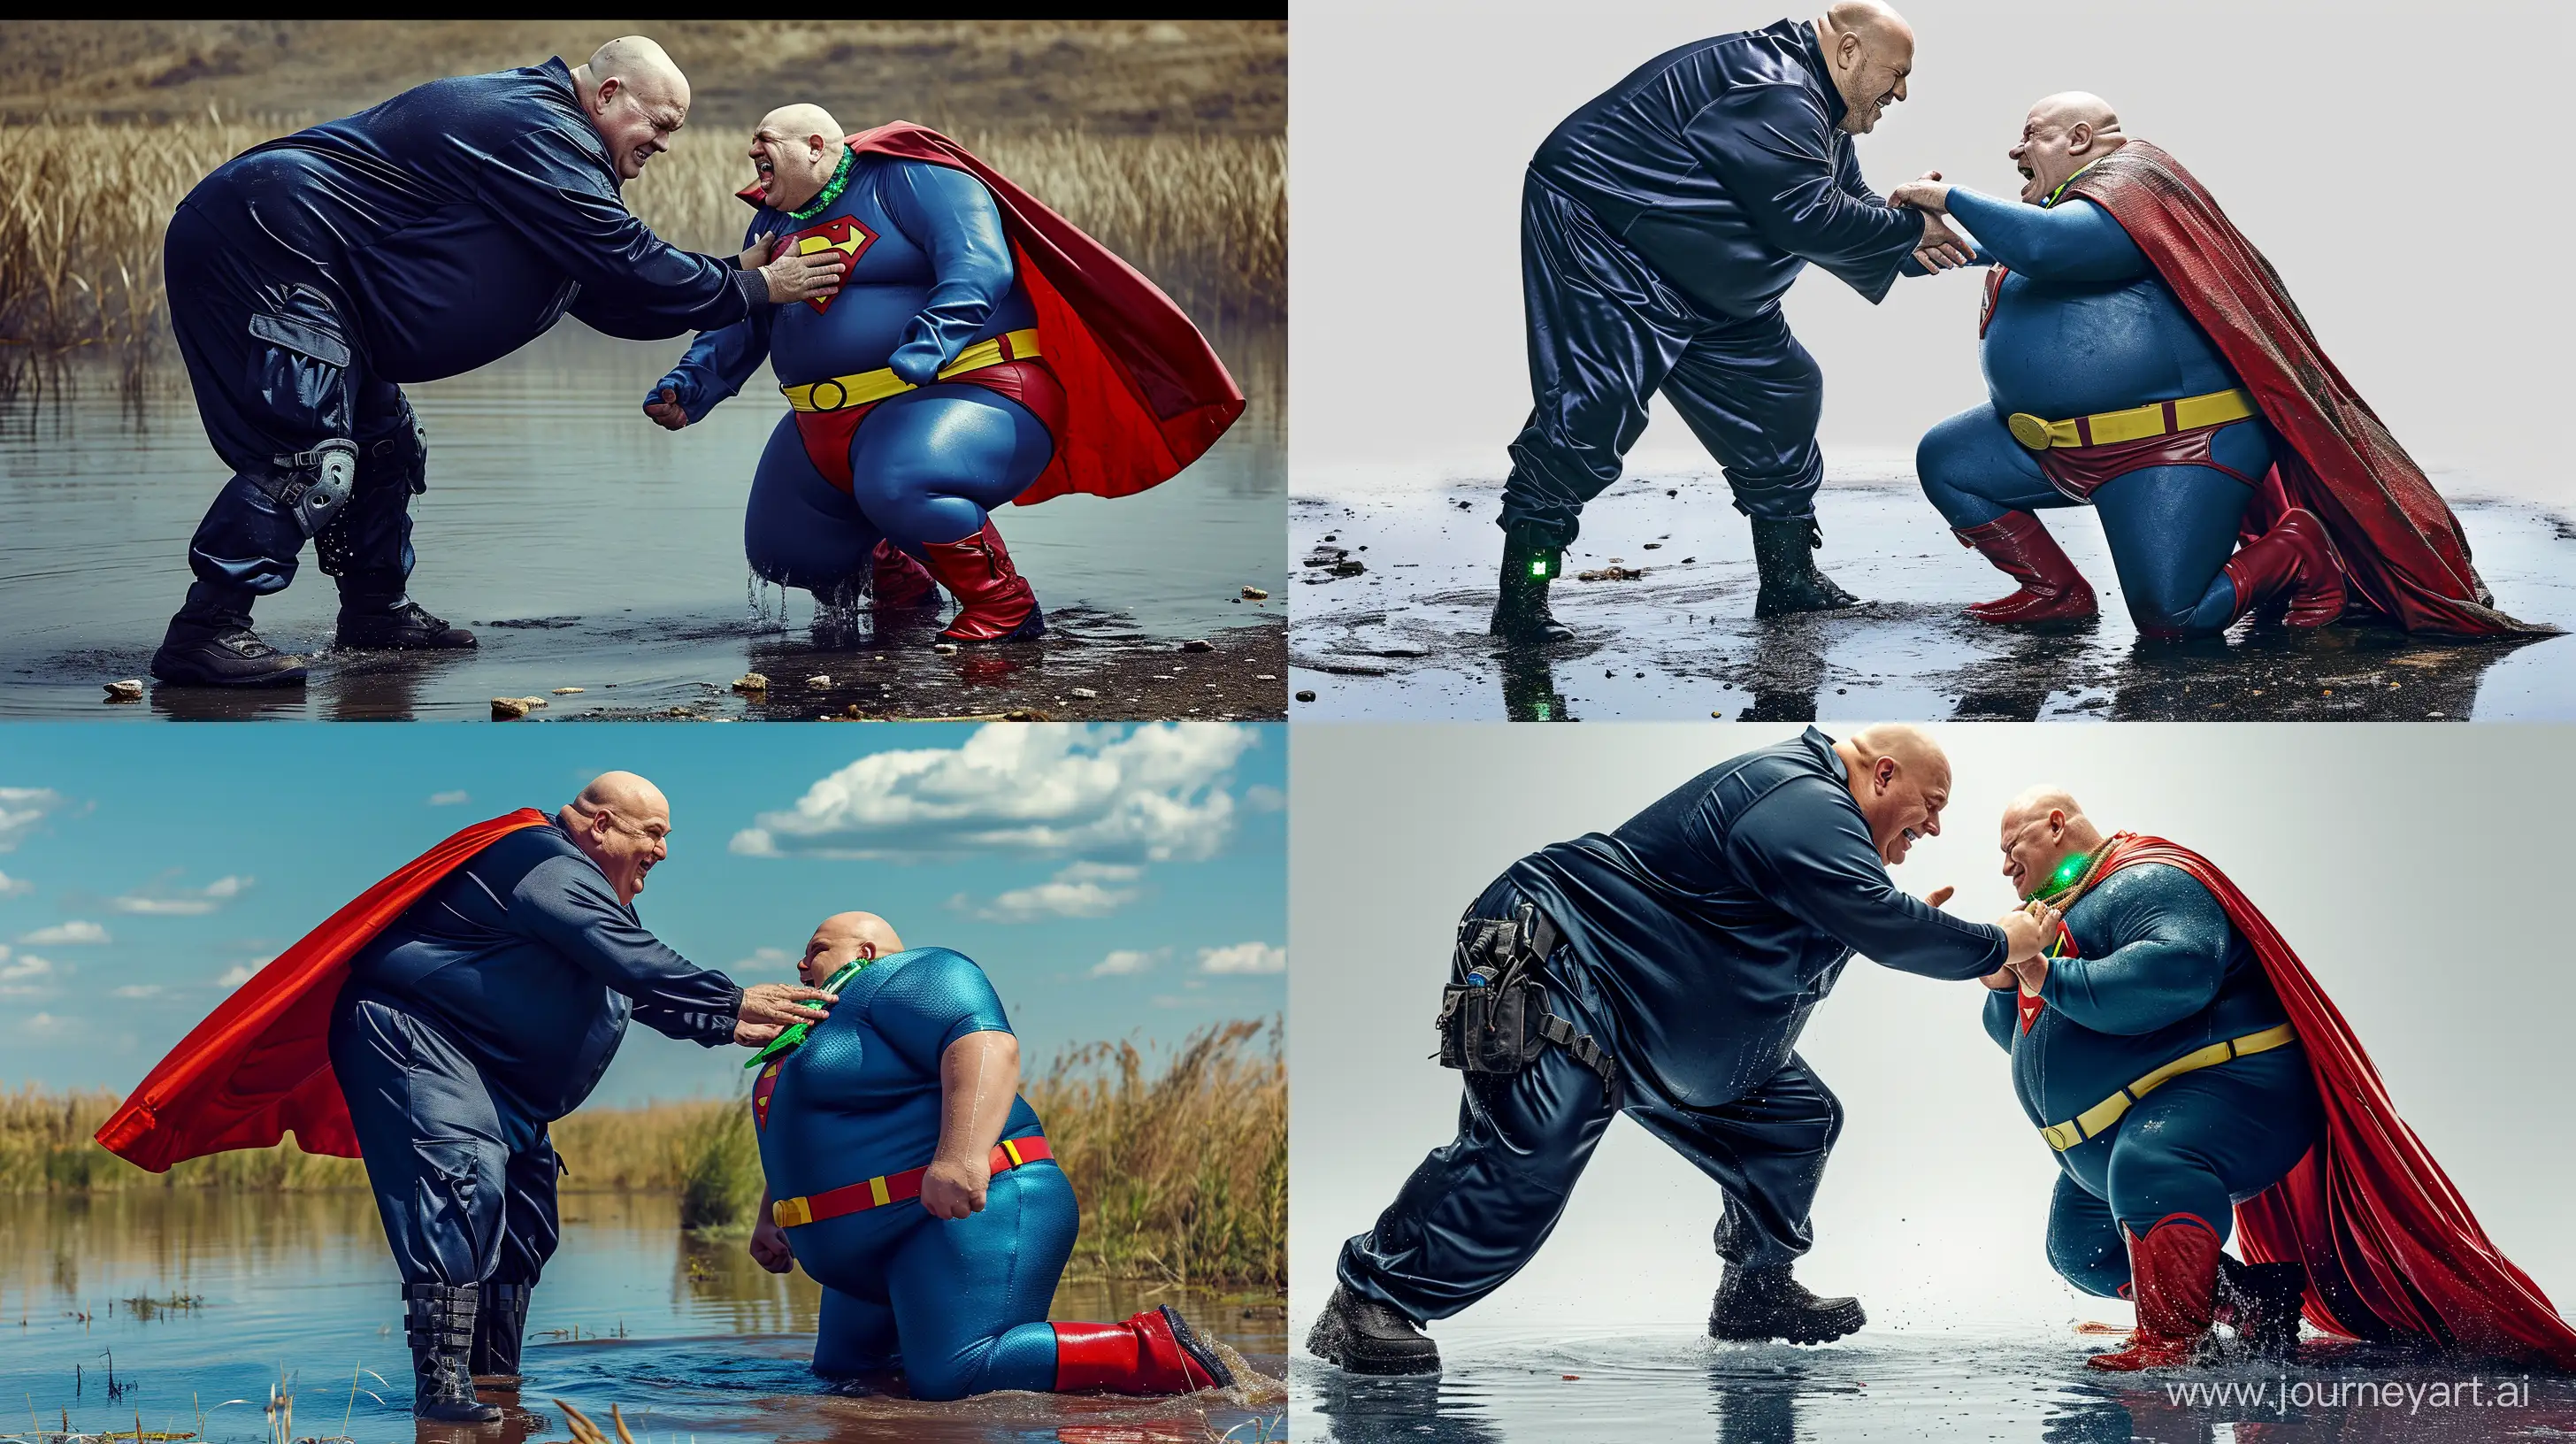 Elderly-Superhero-Showdown-in-Water-Dynamic-Clash-of-Ages